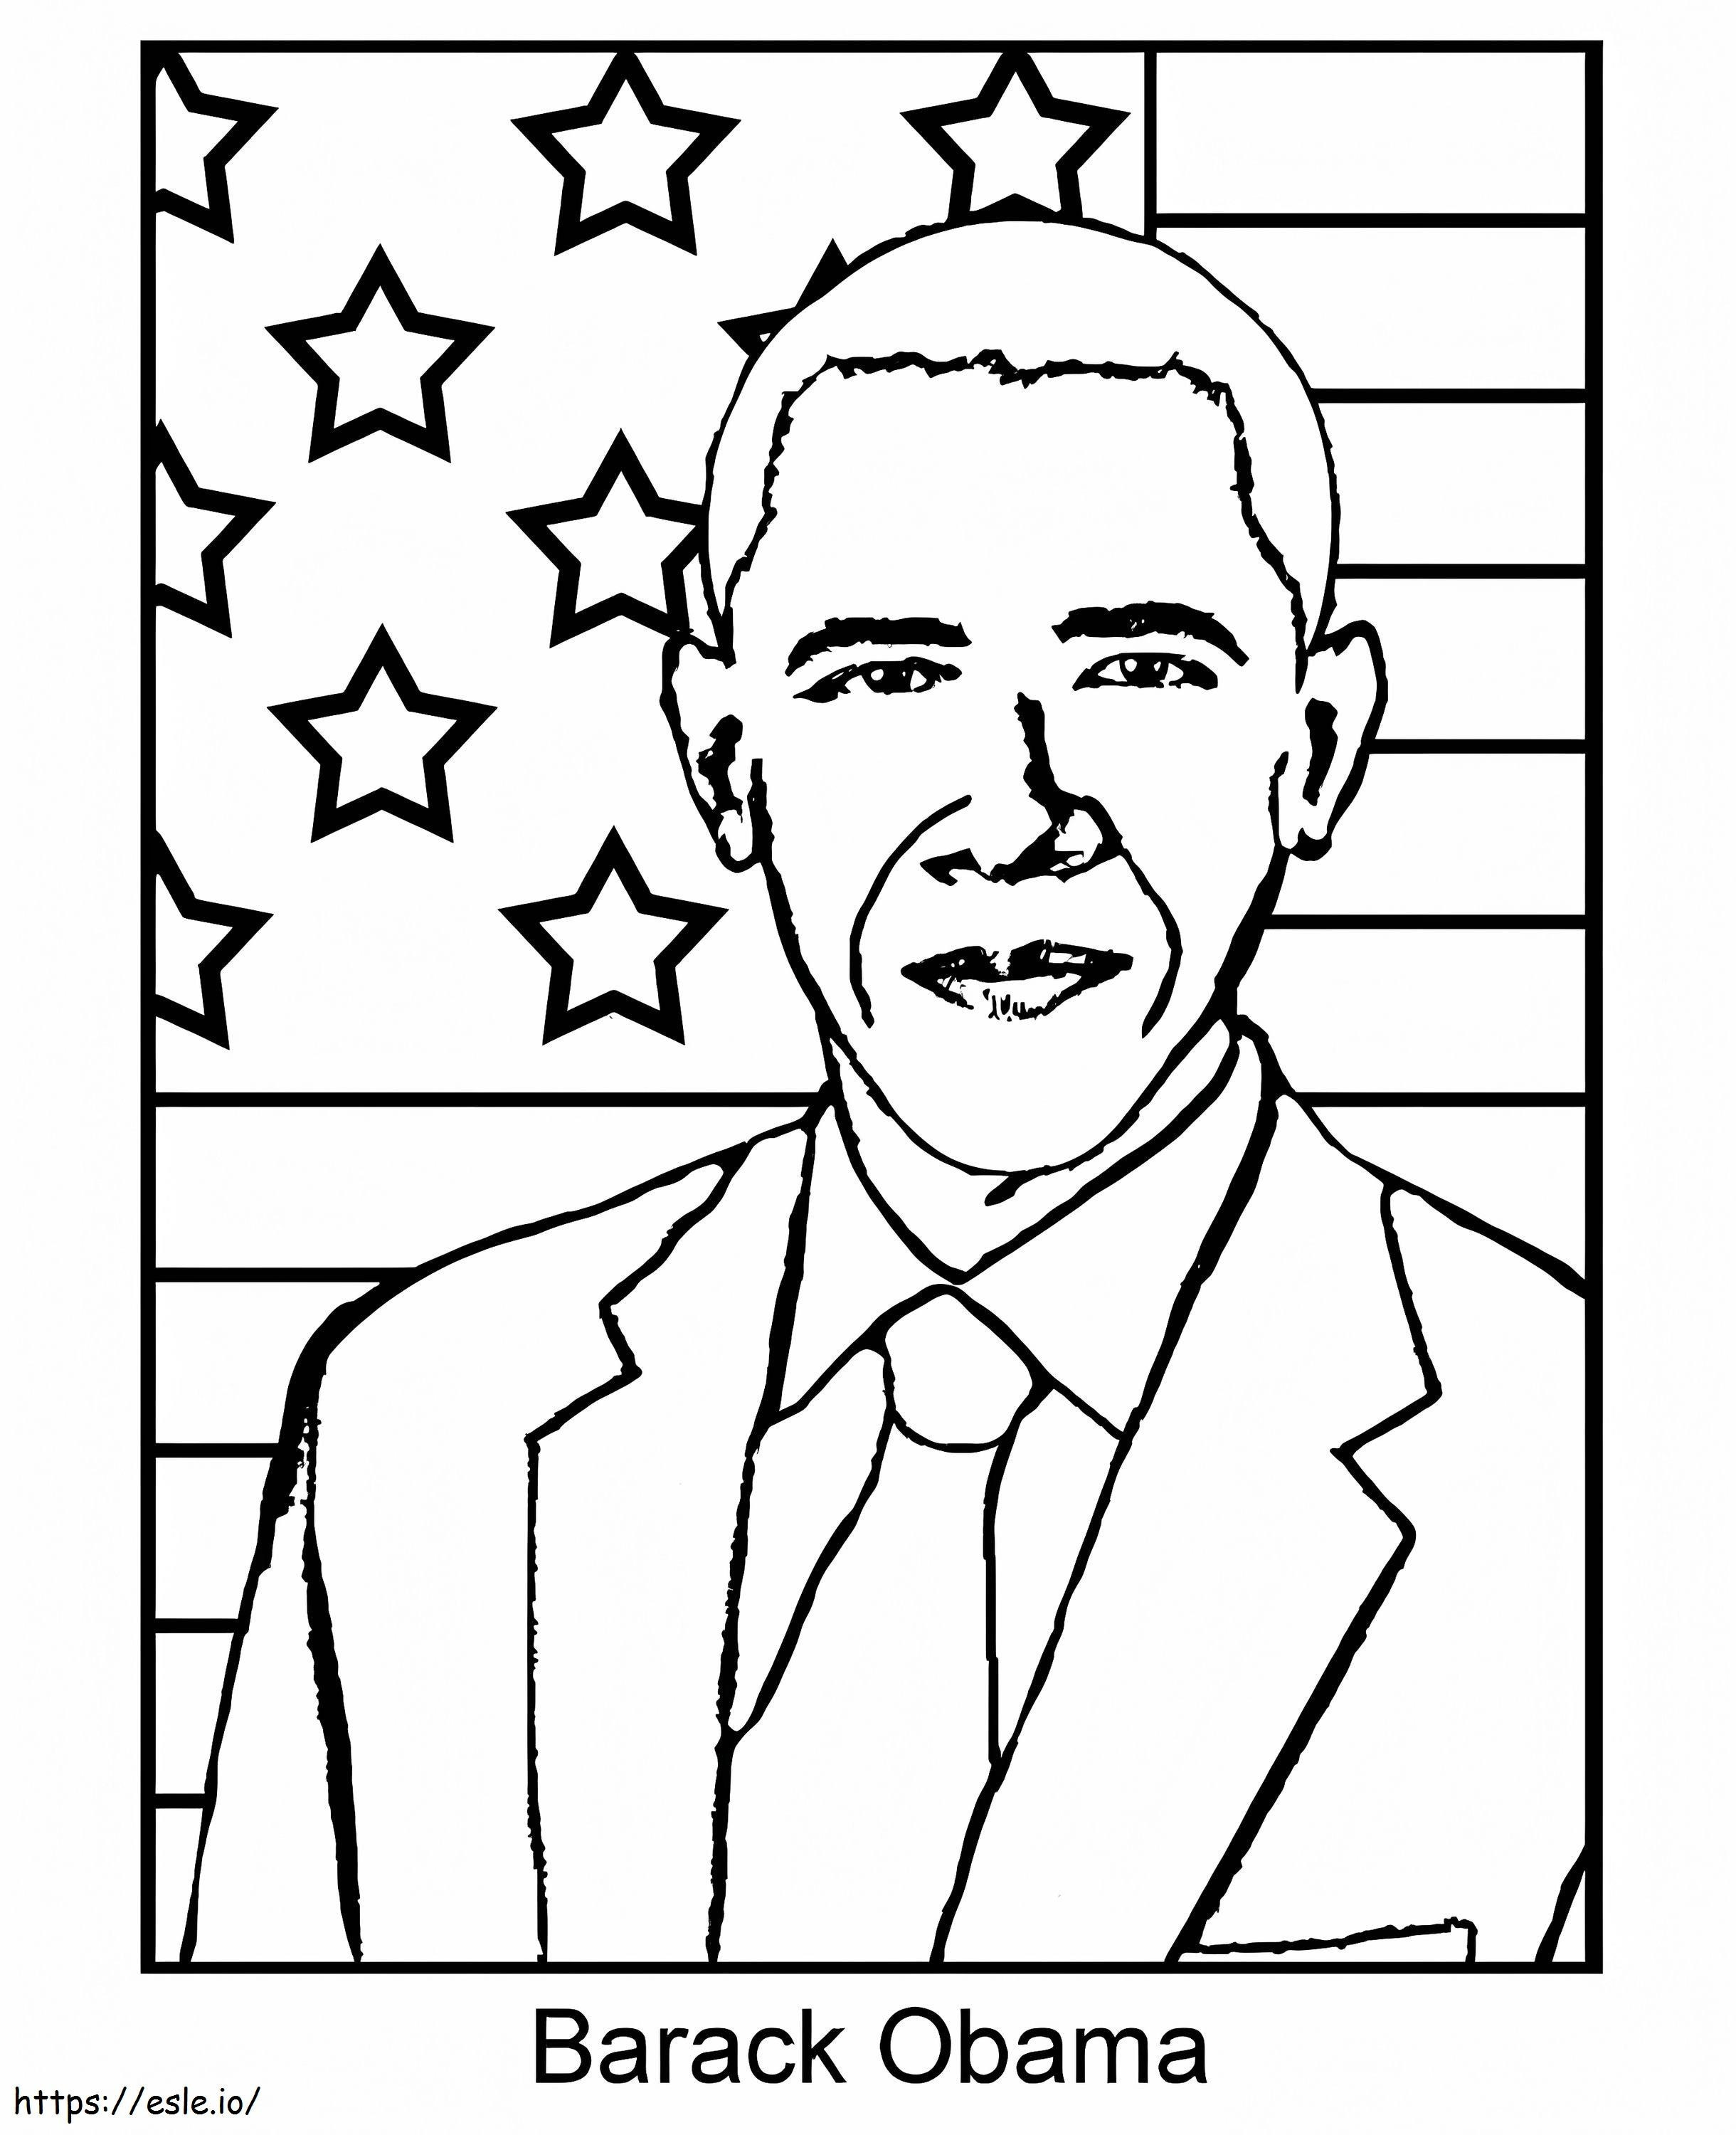 Obama sorrindo para colorir